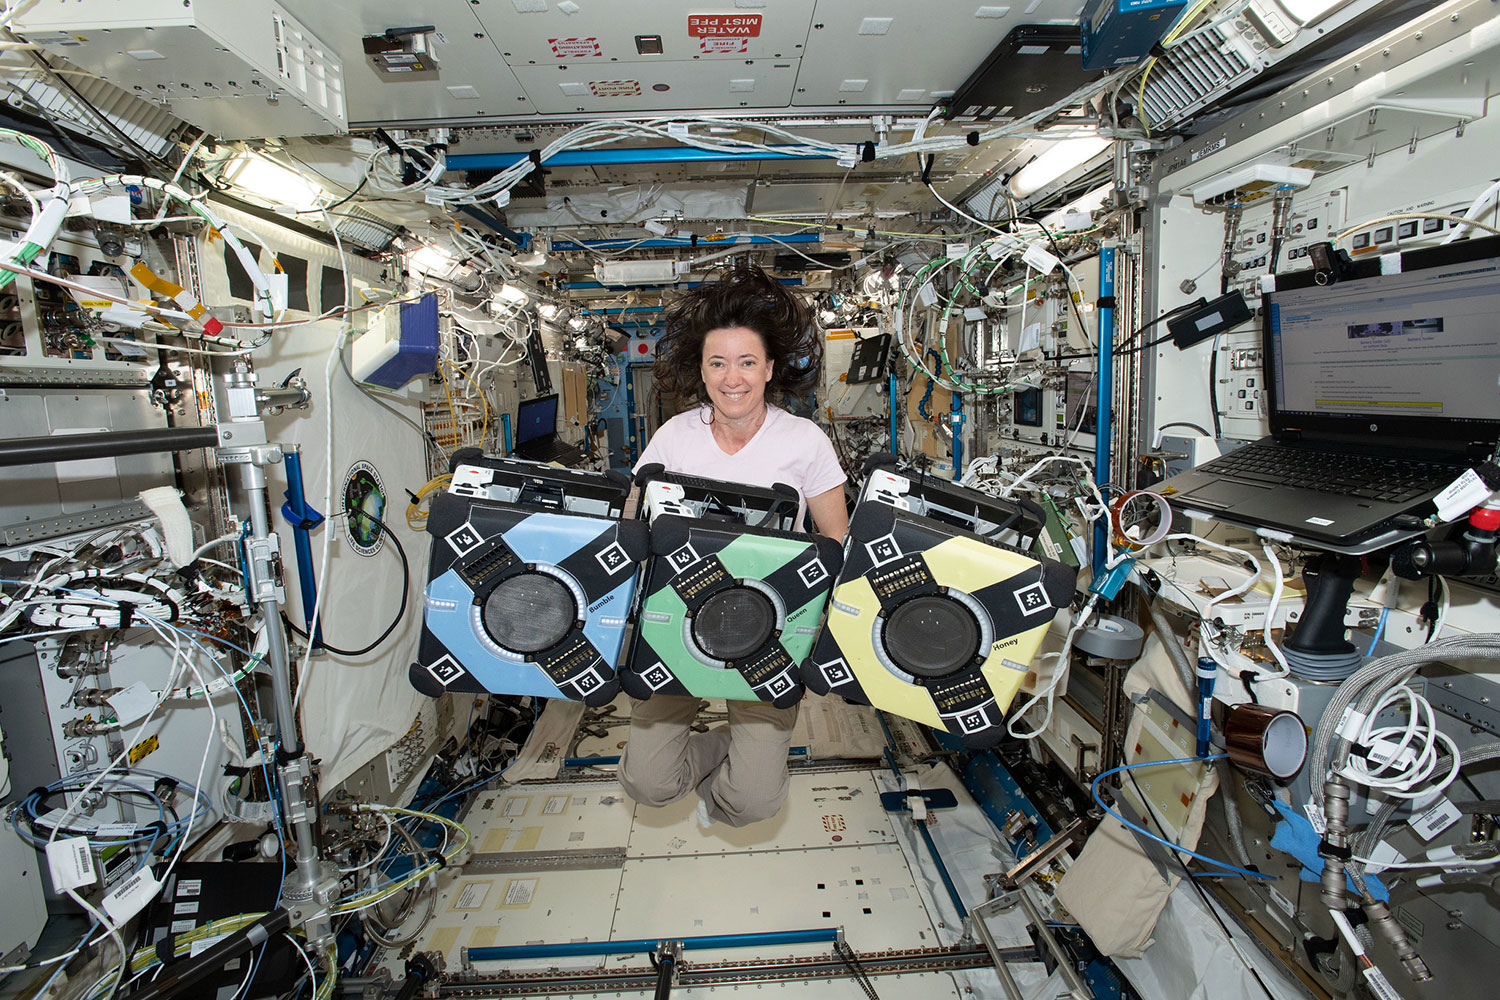 NASA astronaut Megan McArthur with the Astrobee robotic free-flyers